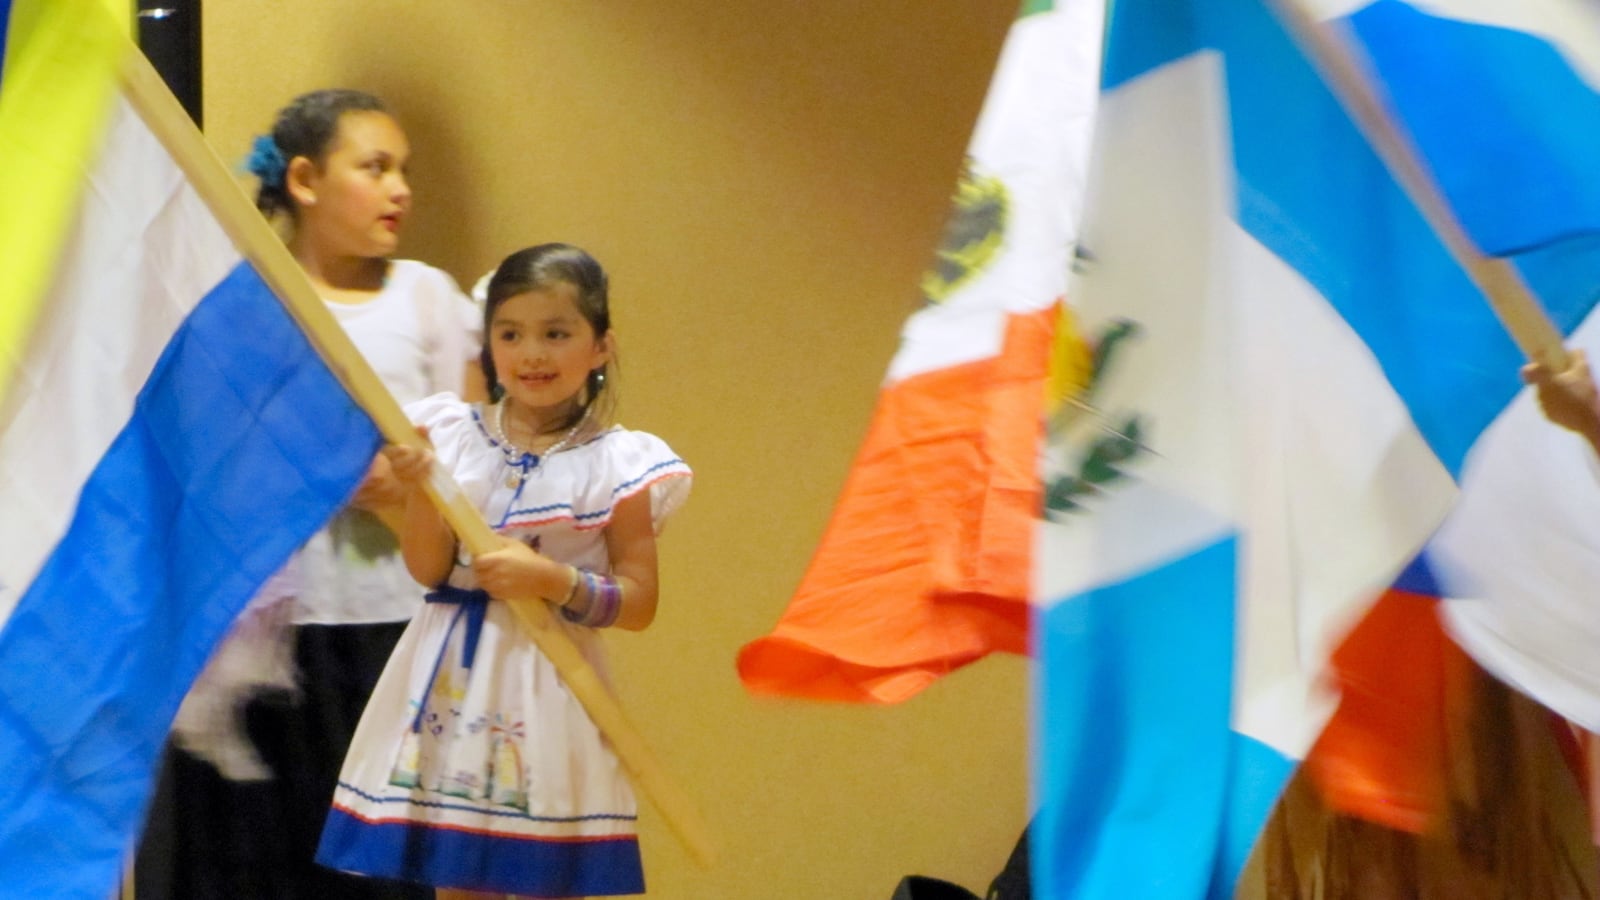 Children presented traditional dances at the Lynhurst International Festival on Wednesday in Wayne Township.